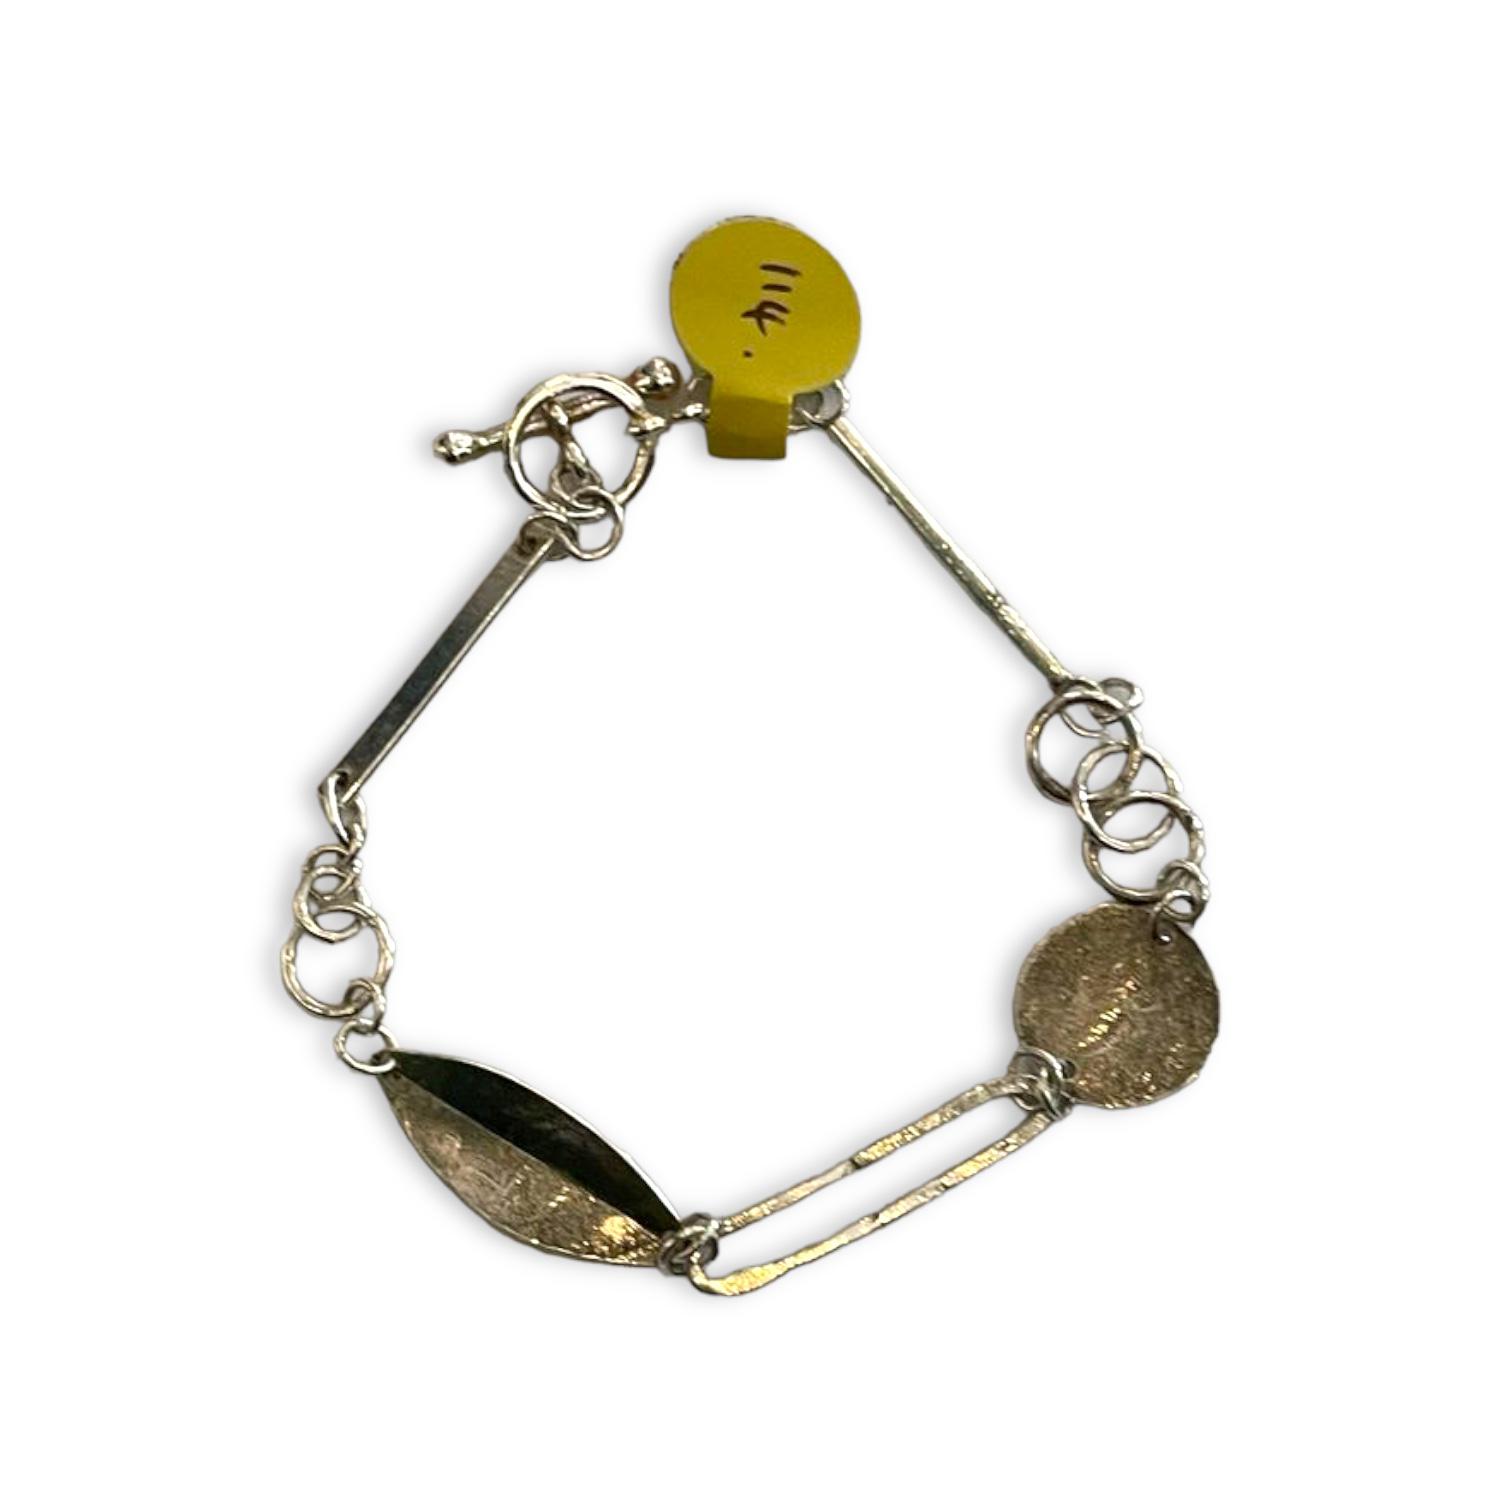 traveller's talsiman bracelet by Madeleine Spencer Jewellery